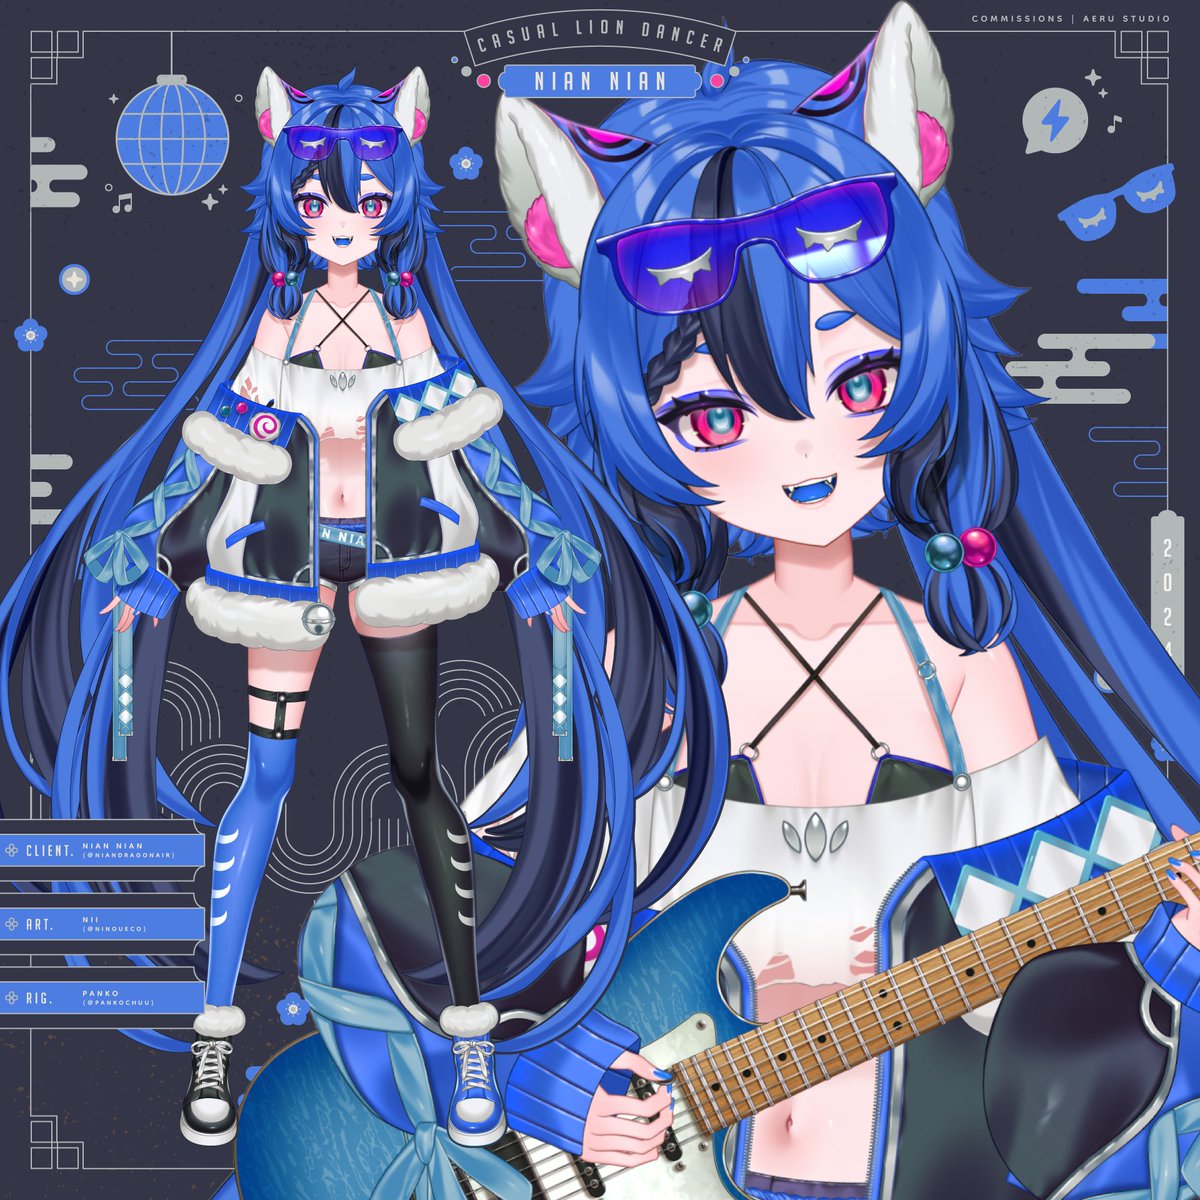 「 😎₊˚ casual lion dancer! 」🔹blue ver. ─ vtuber model outfit for nian nian (@/niandragonair) cool electric blue nian nian! ⚡️